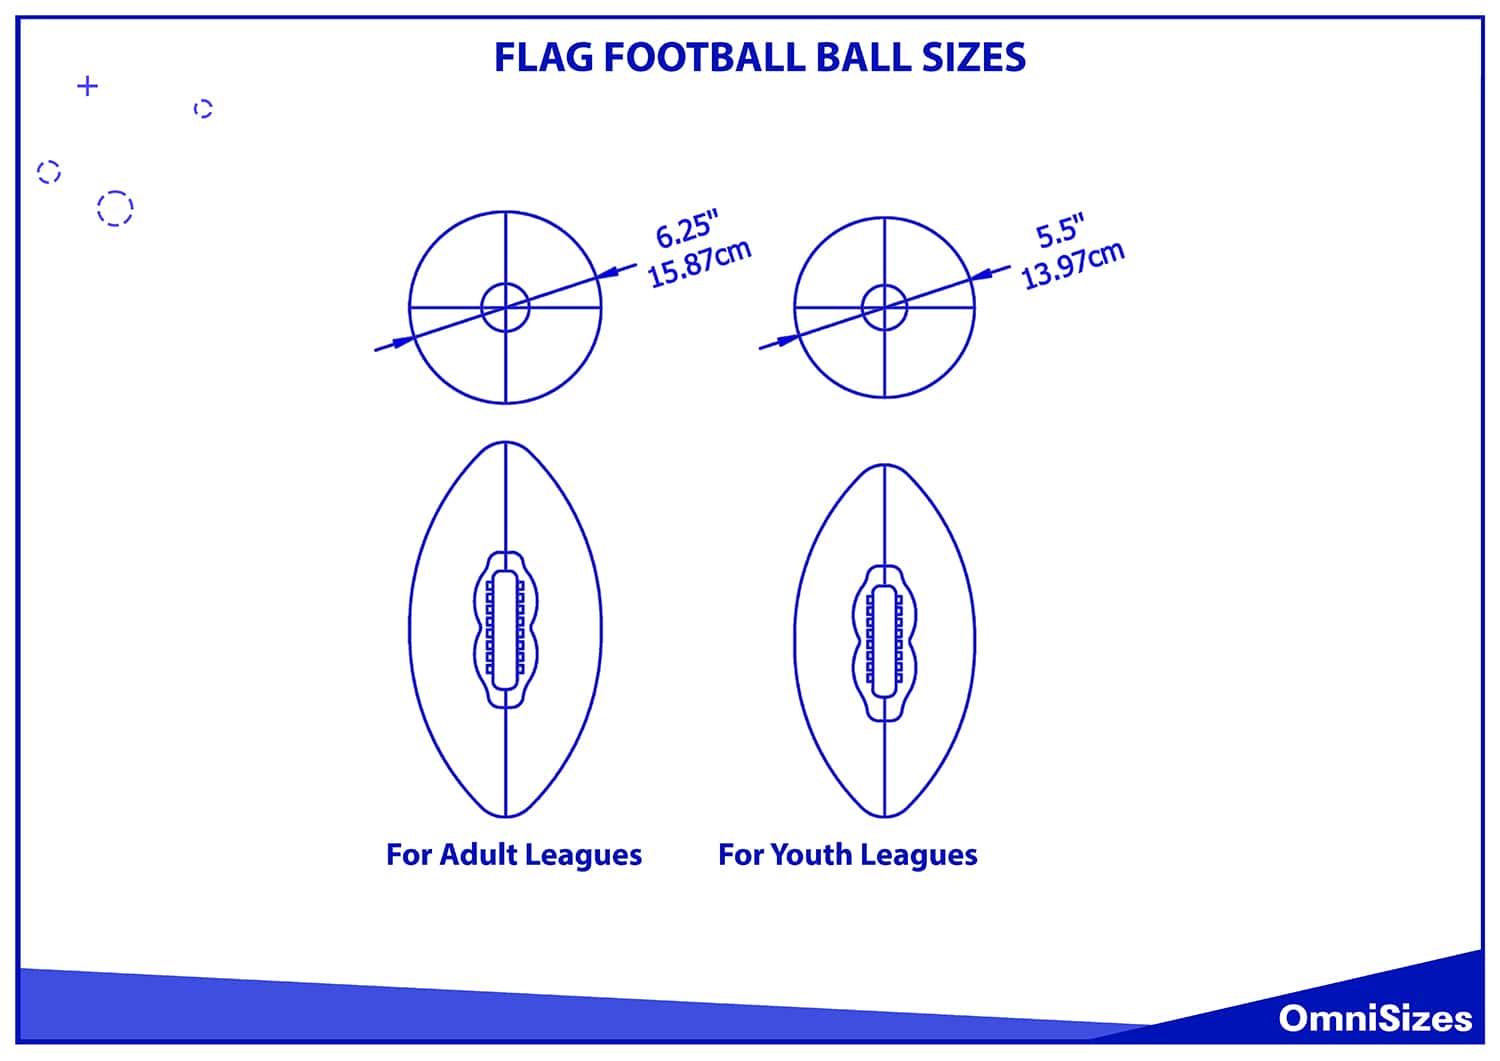 Flag football ball sizes